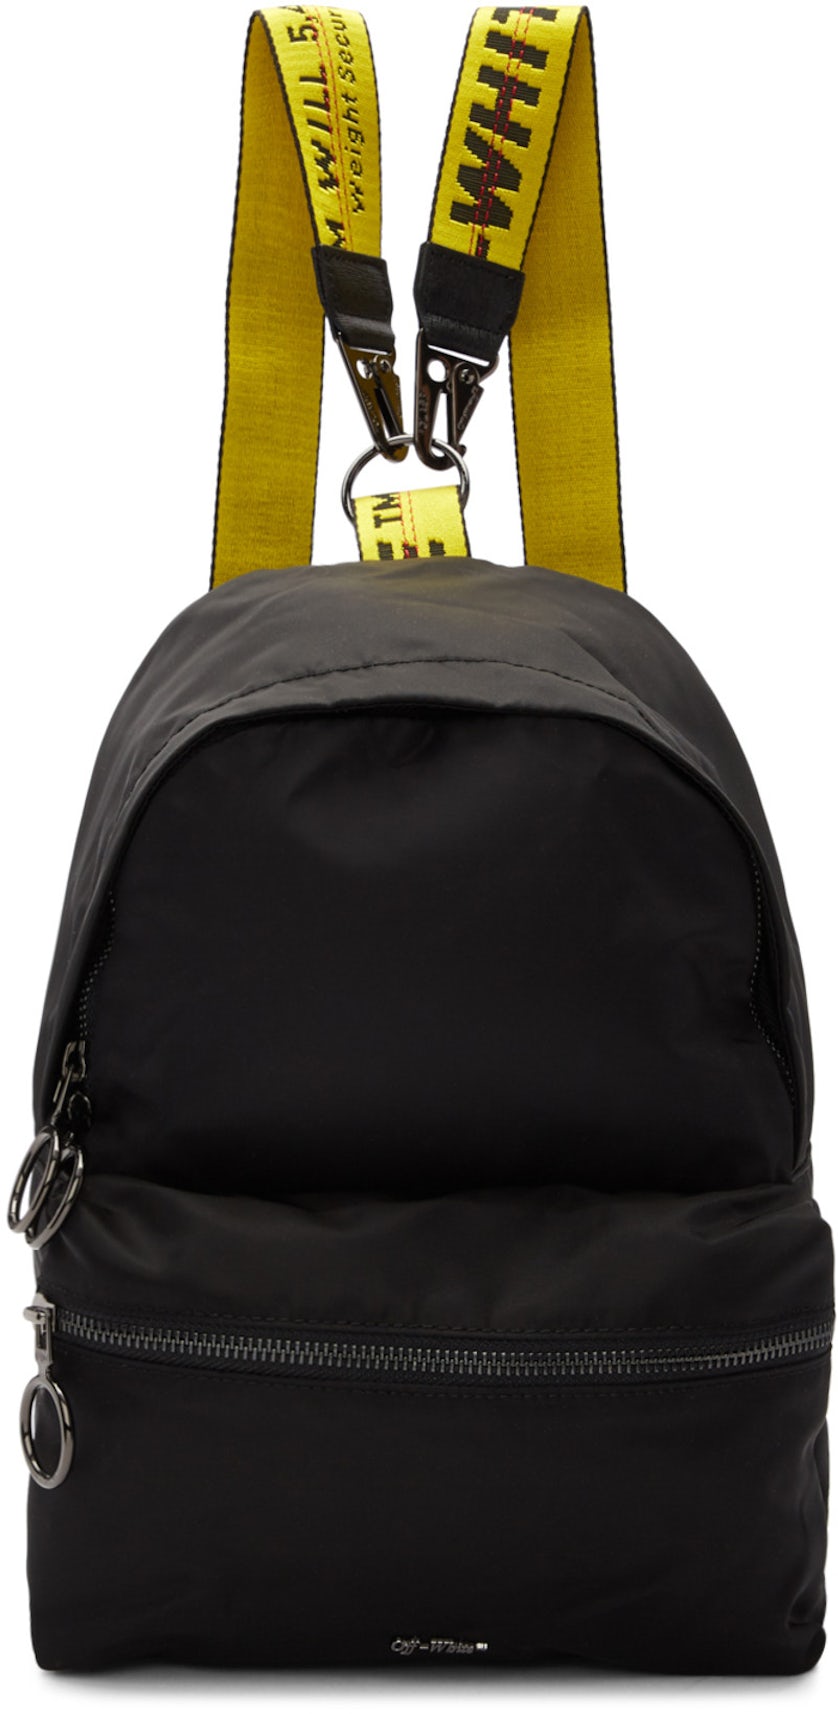 OFF-WHITE Backpack Nylon Mini Black Yellow in Nylon with